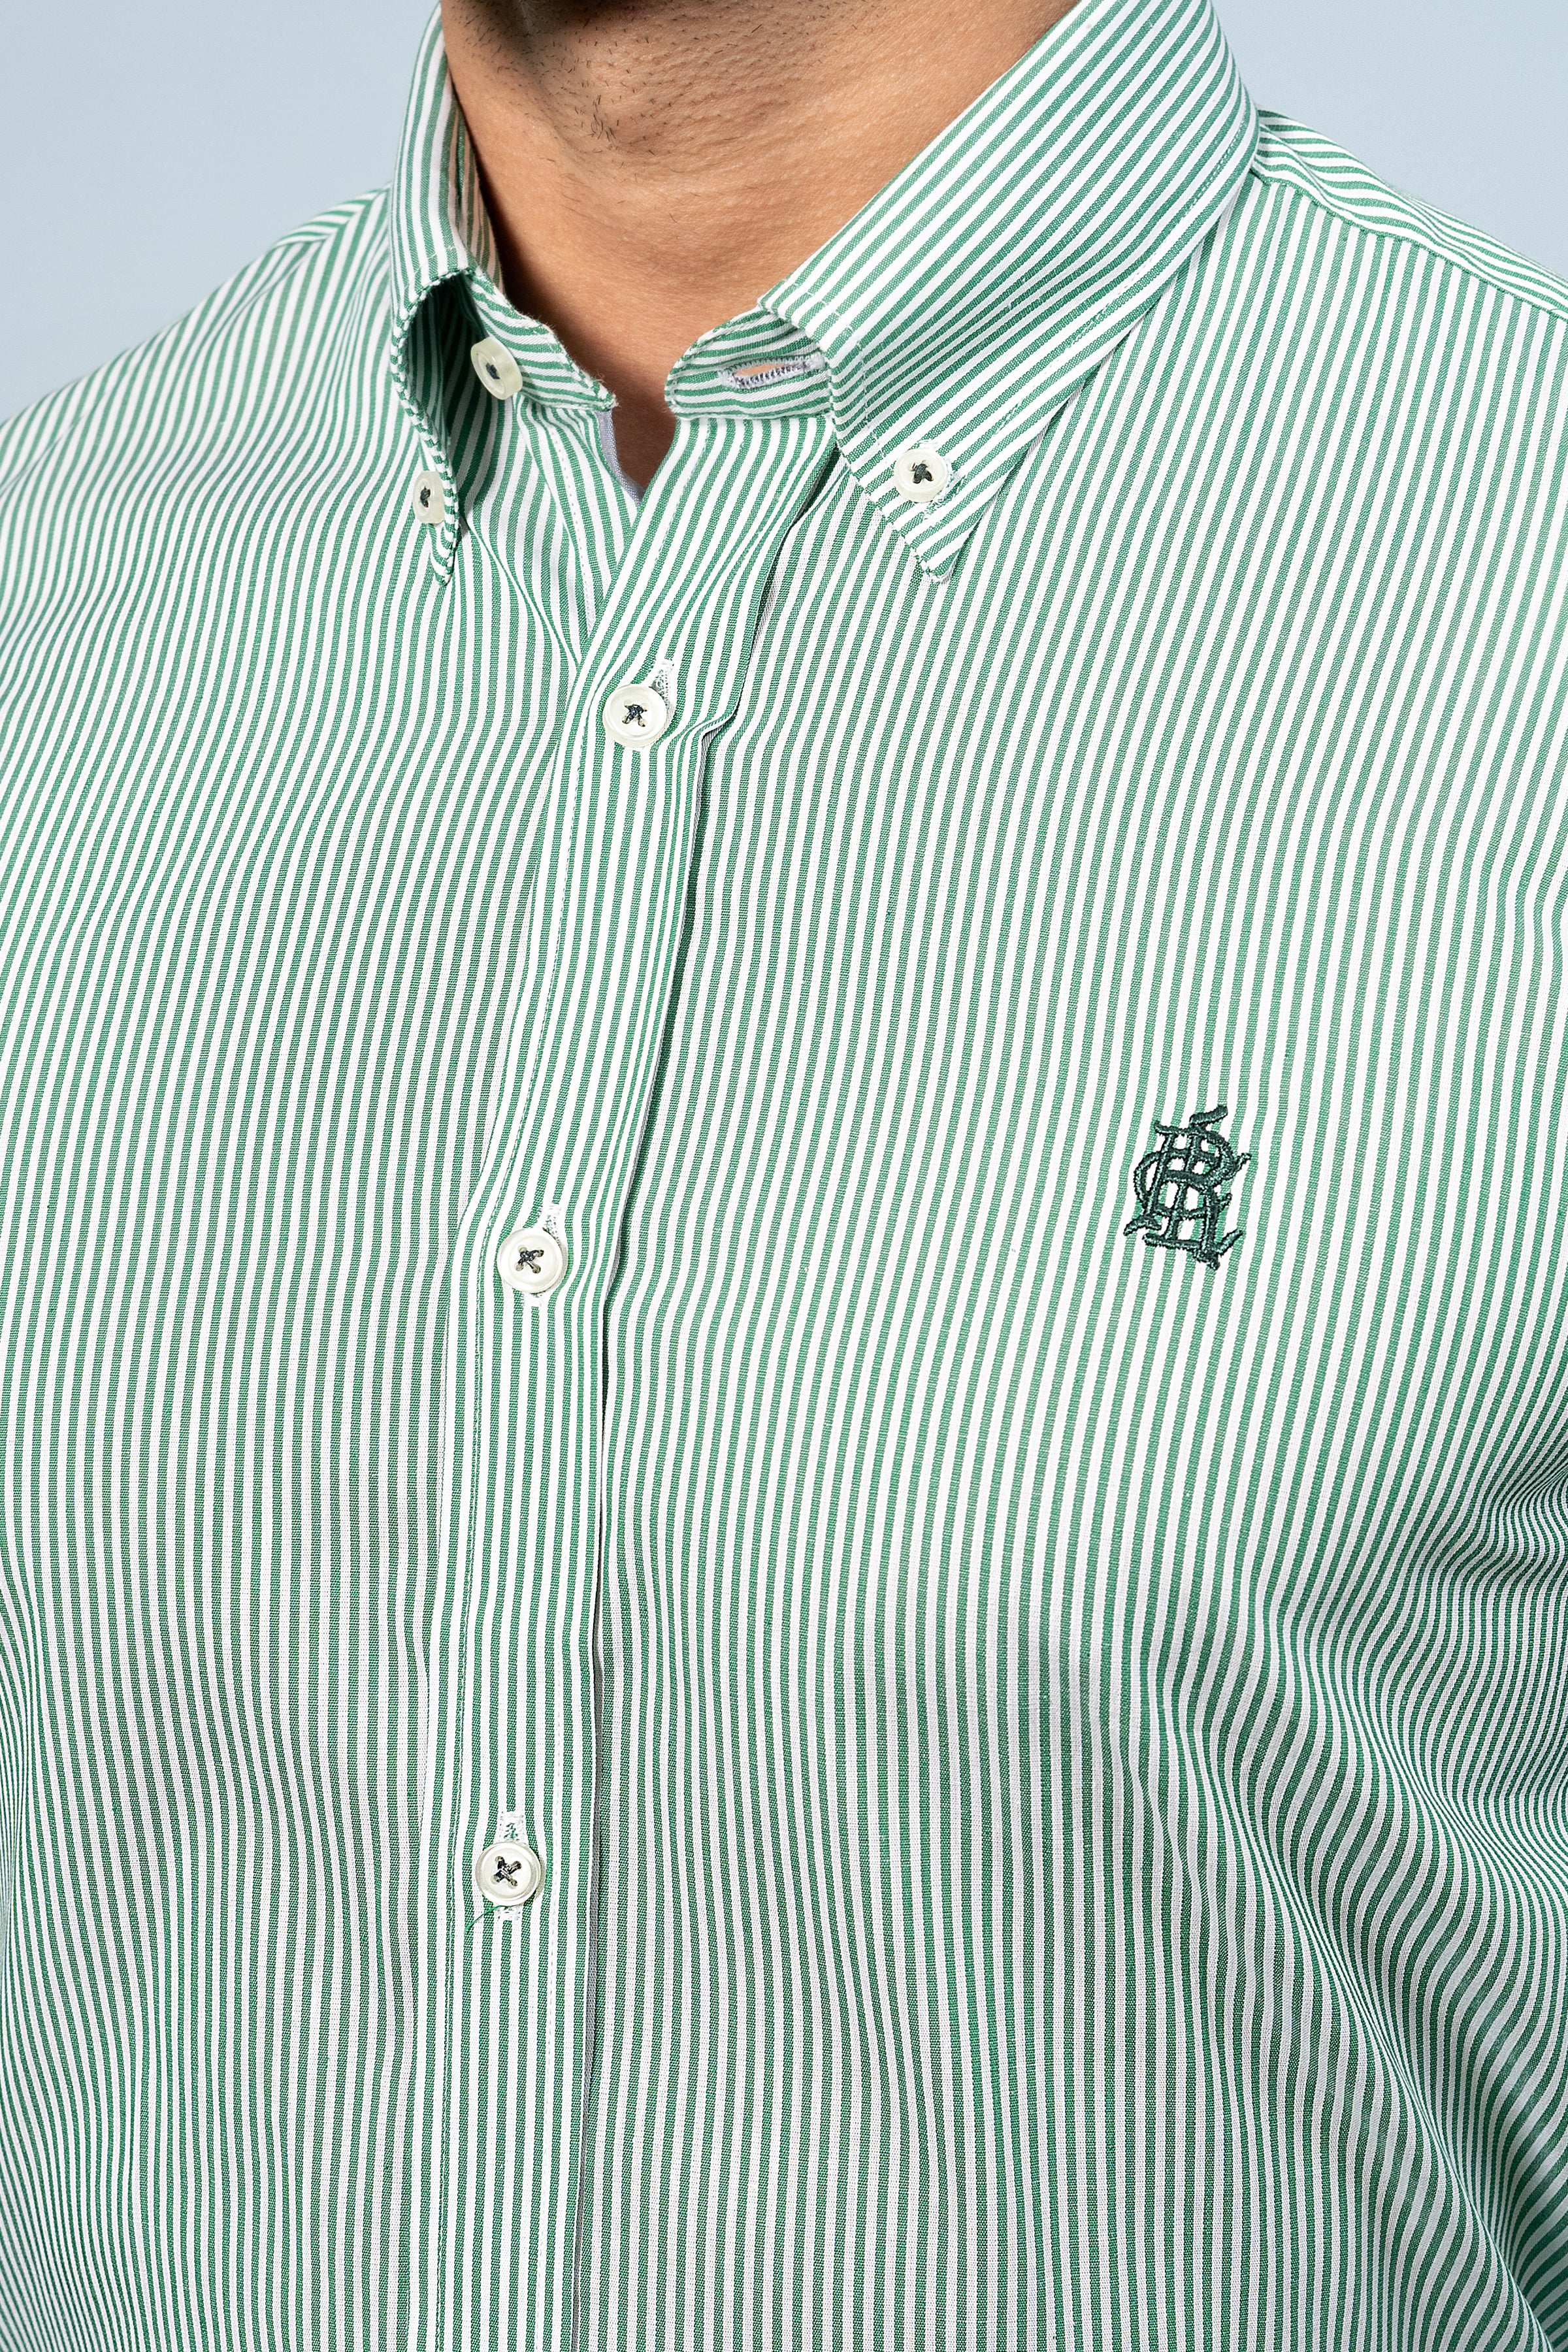 SEMI FORMAL SHIRTS GREEN LINE - Charcoal Clothing